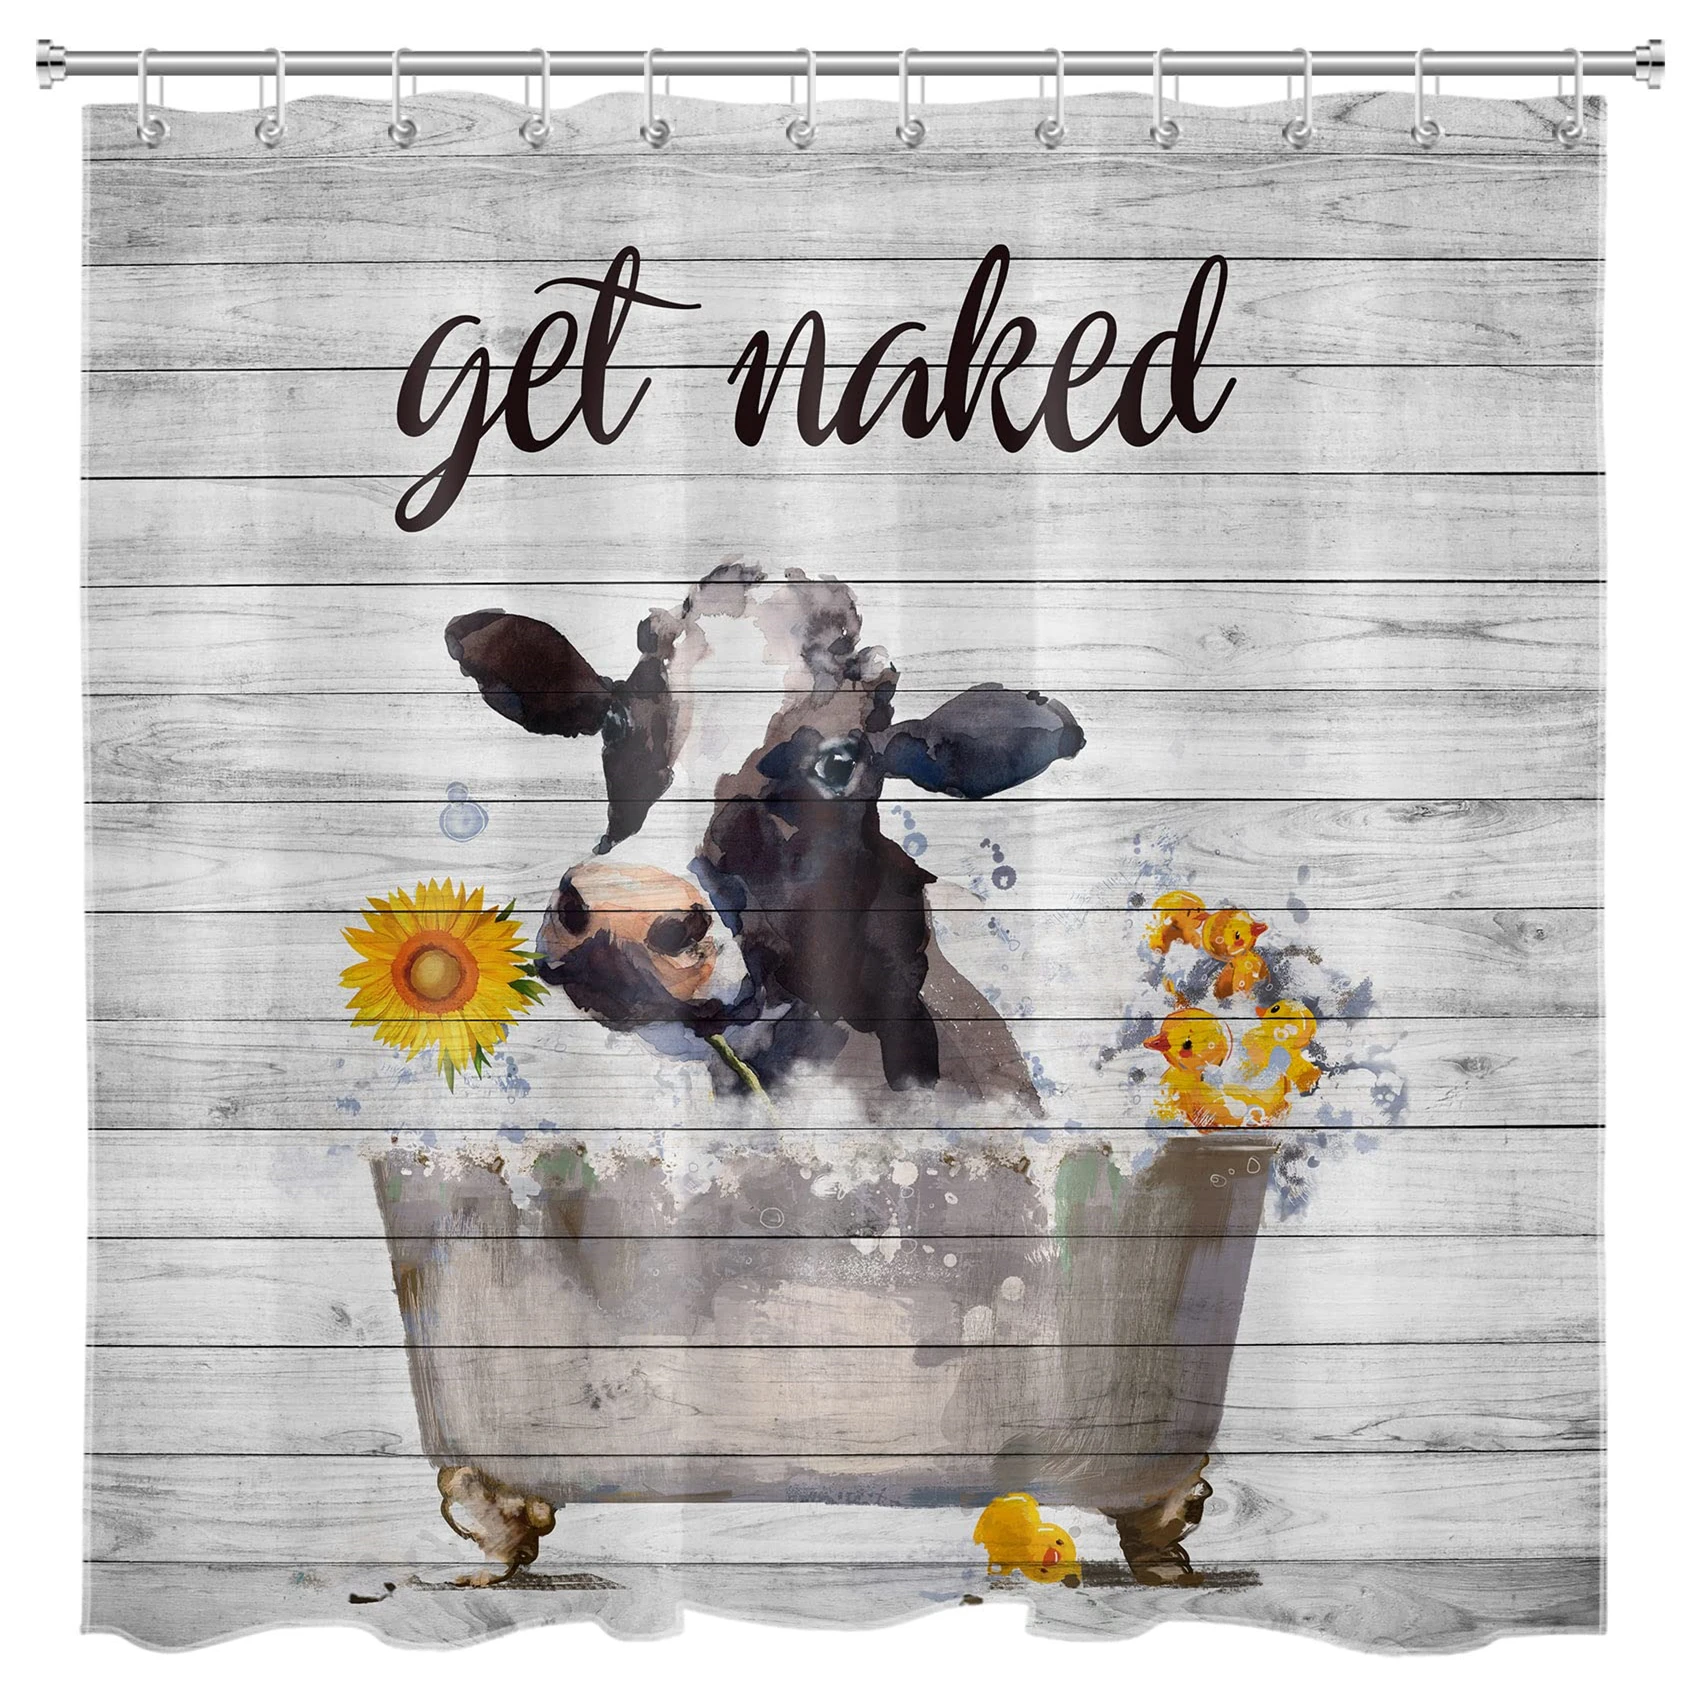 

Get Naked Cow Shower Curtain Funny Rustic Wooden Bull Western Animal Portrait Waterproof Bathroom Decor Set Farmhouse Highland